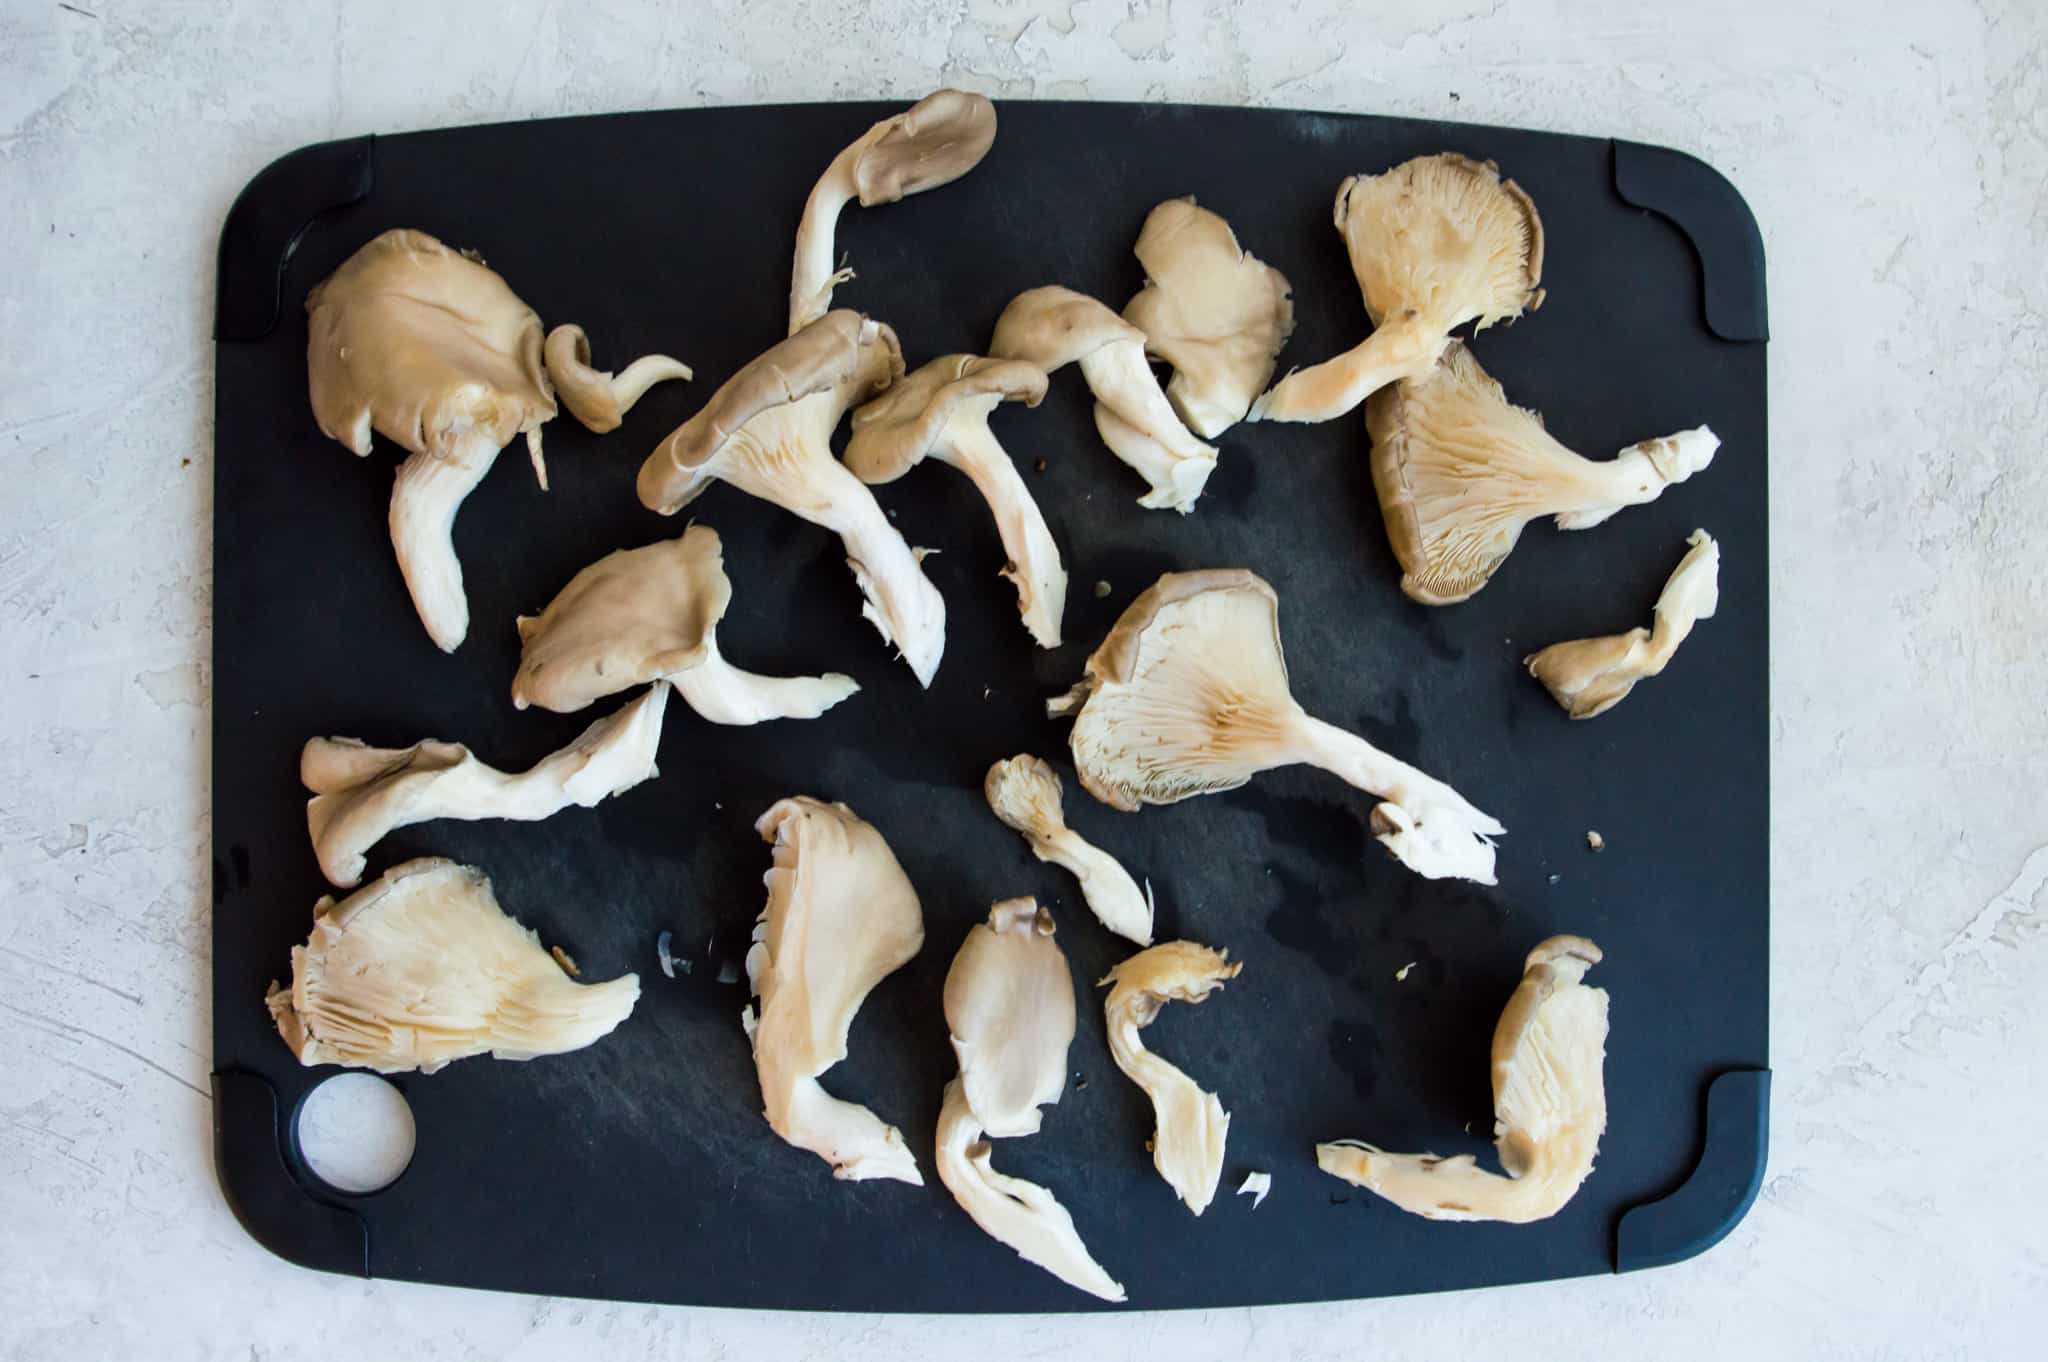 Cut up oyster mushrooms on a cutting board.